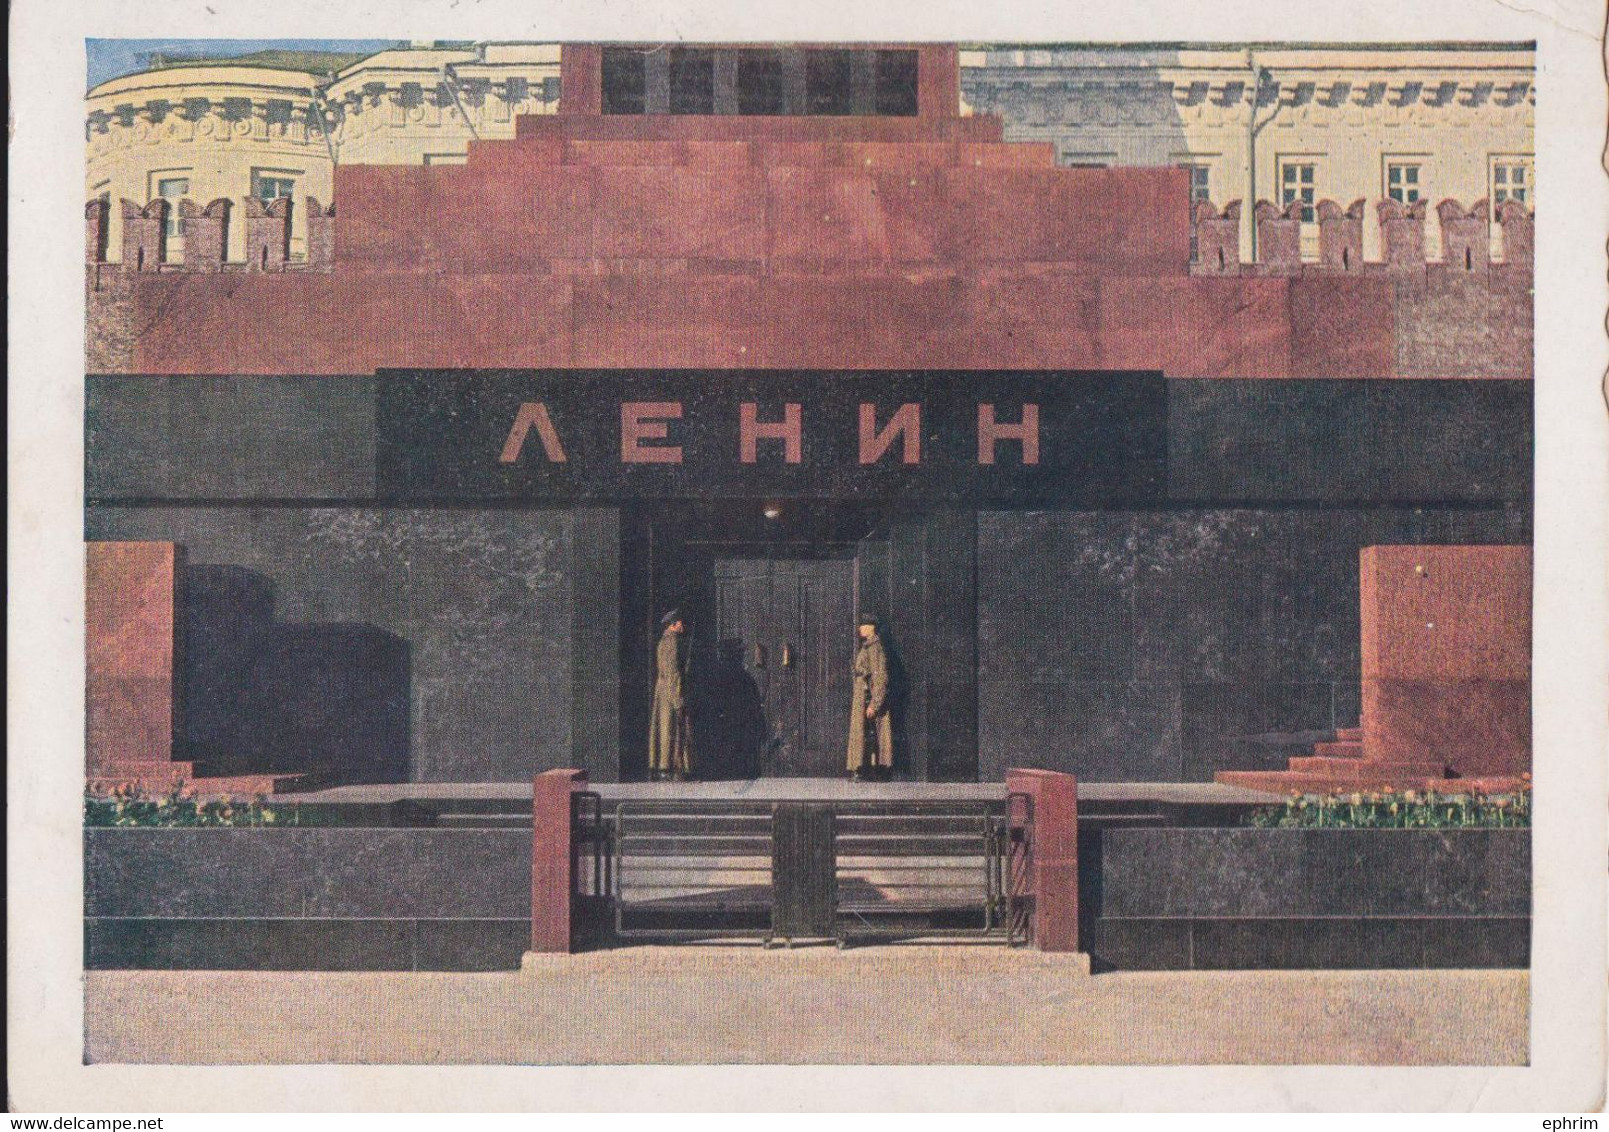 Urss Carte Postale Timbre Mausolée Lénine Soviet Russia Stamp Postcard - Covers & Documents